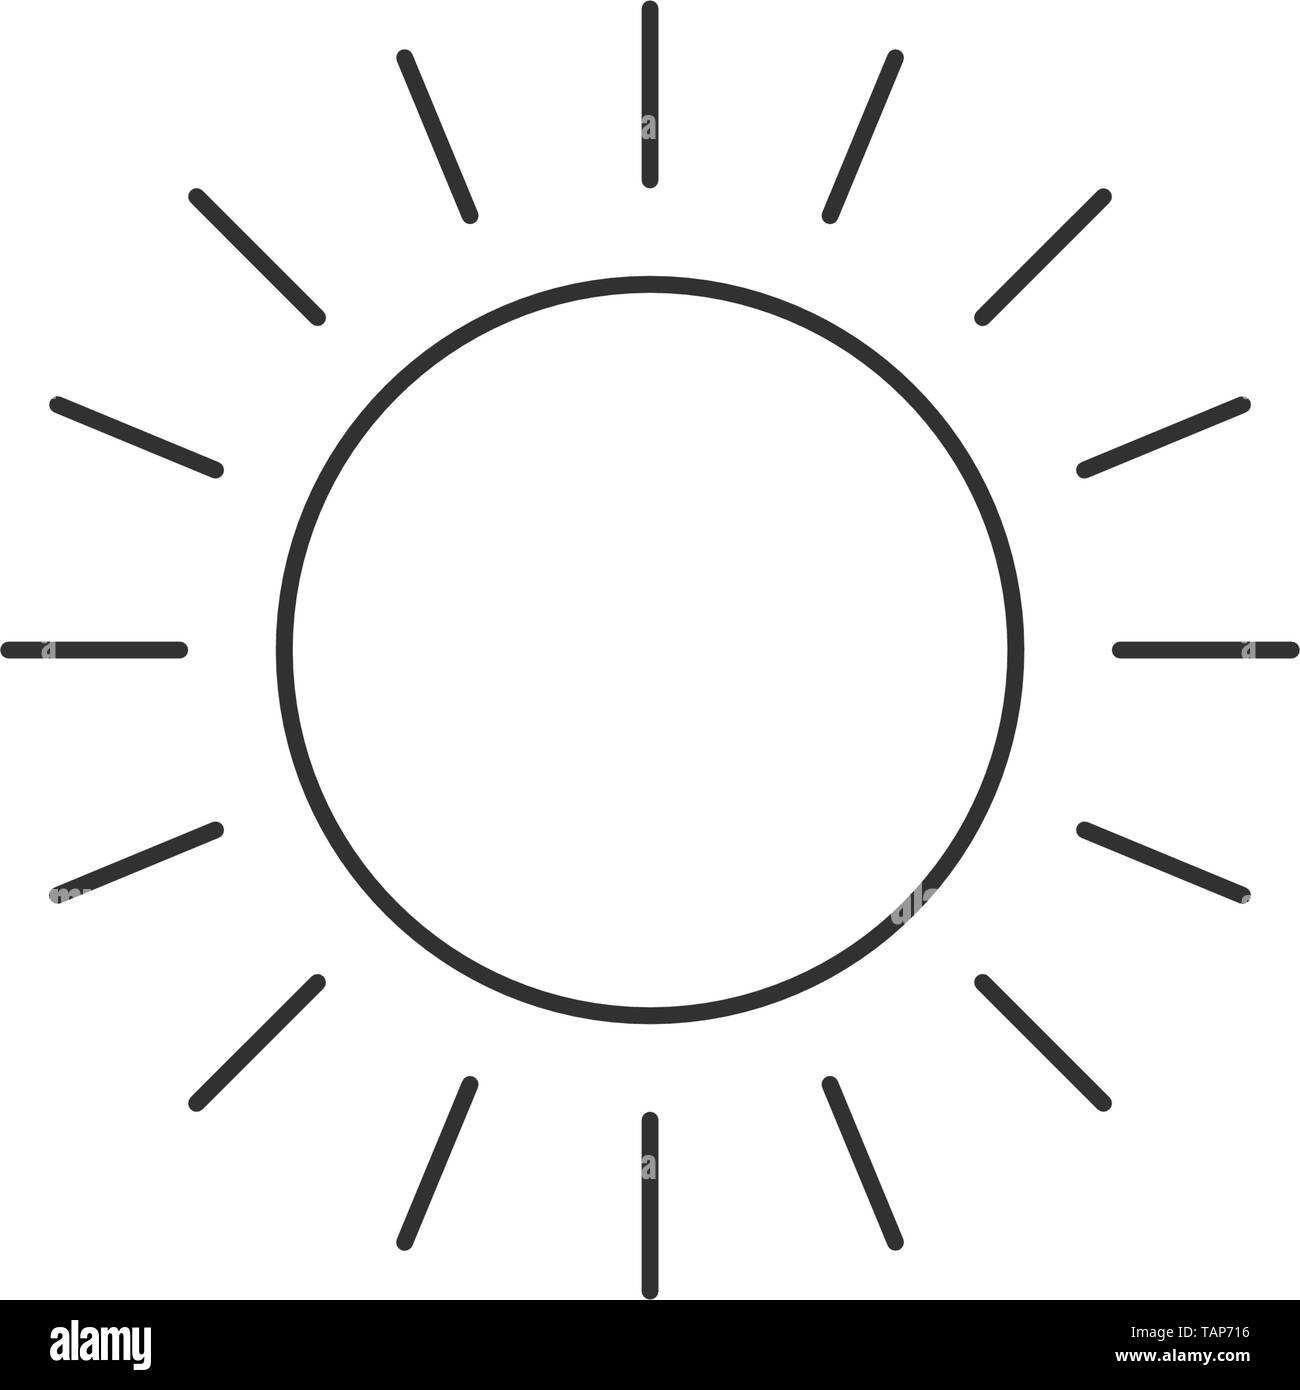 Sunny Weather Symbol Black And White